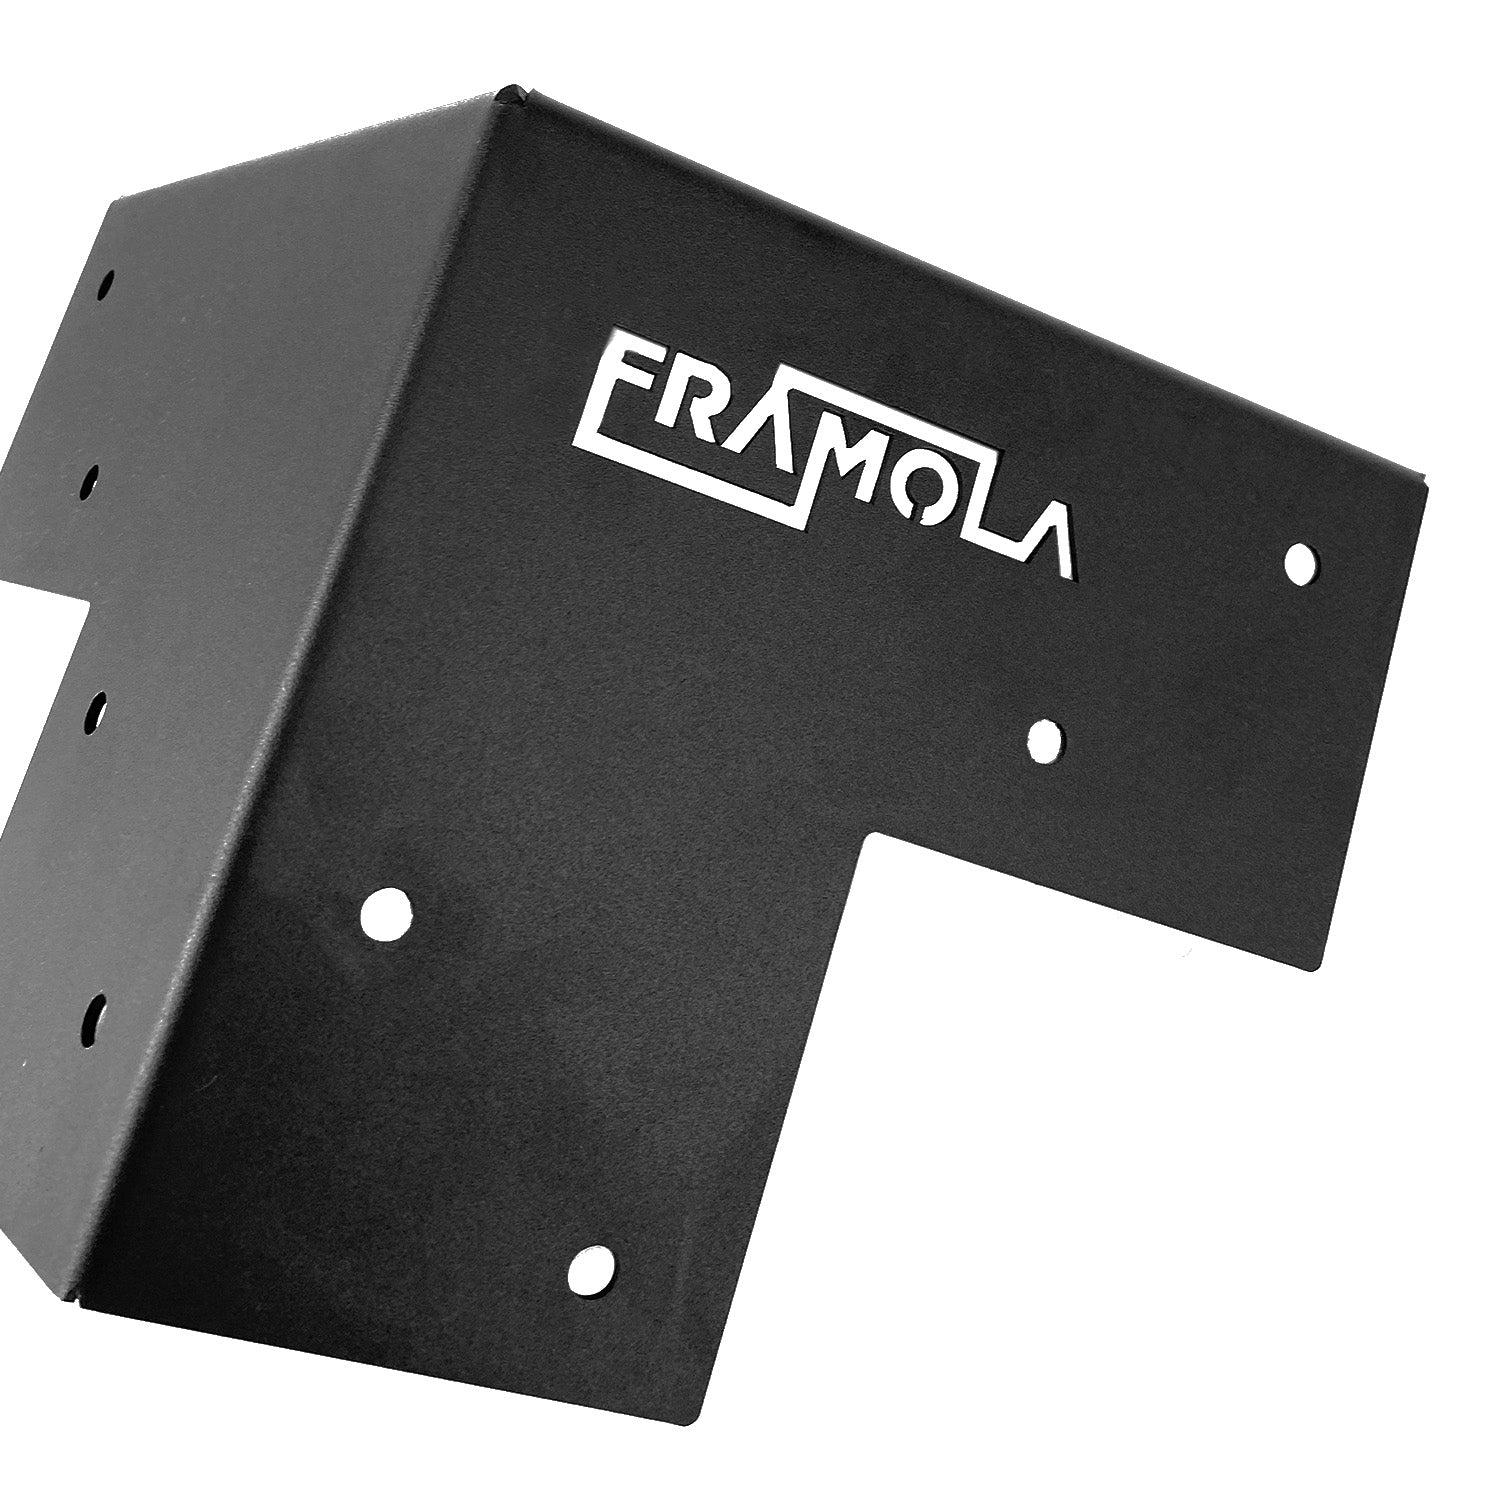 Framola™ Pergola Obtuse Angle Corner Brackets (Pack of 2)